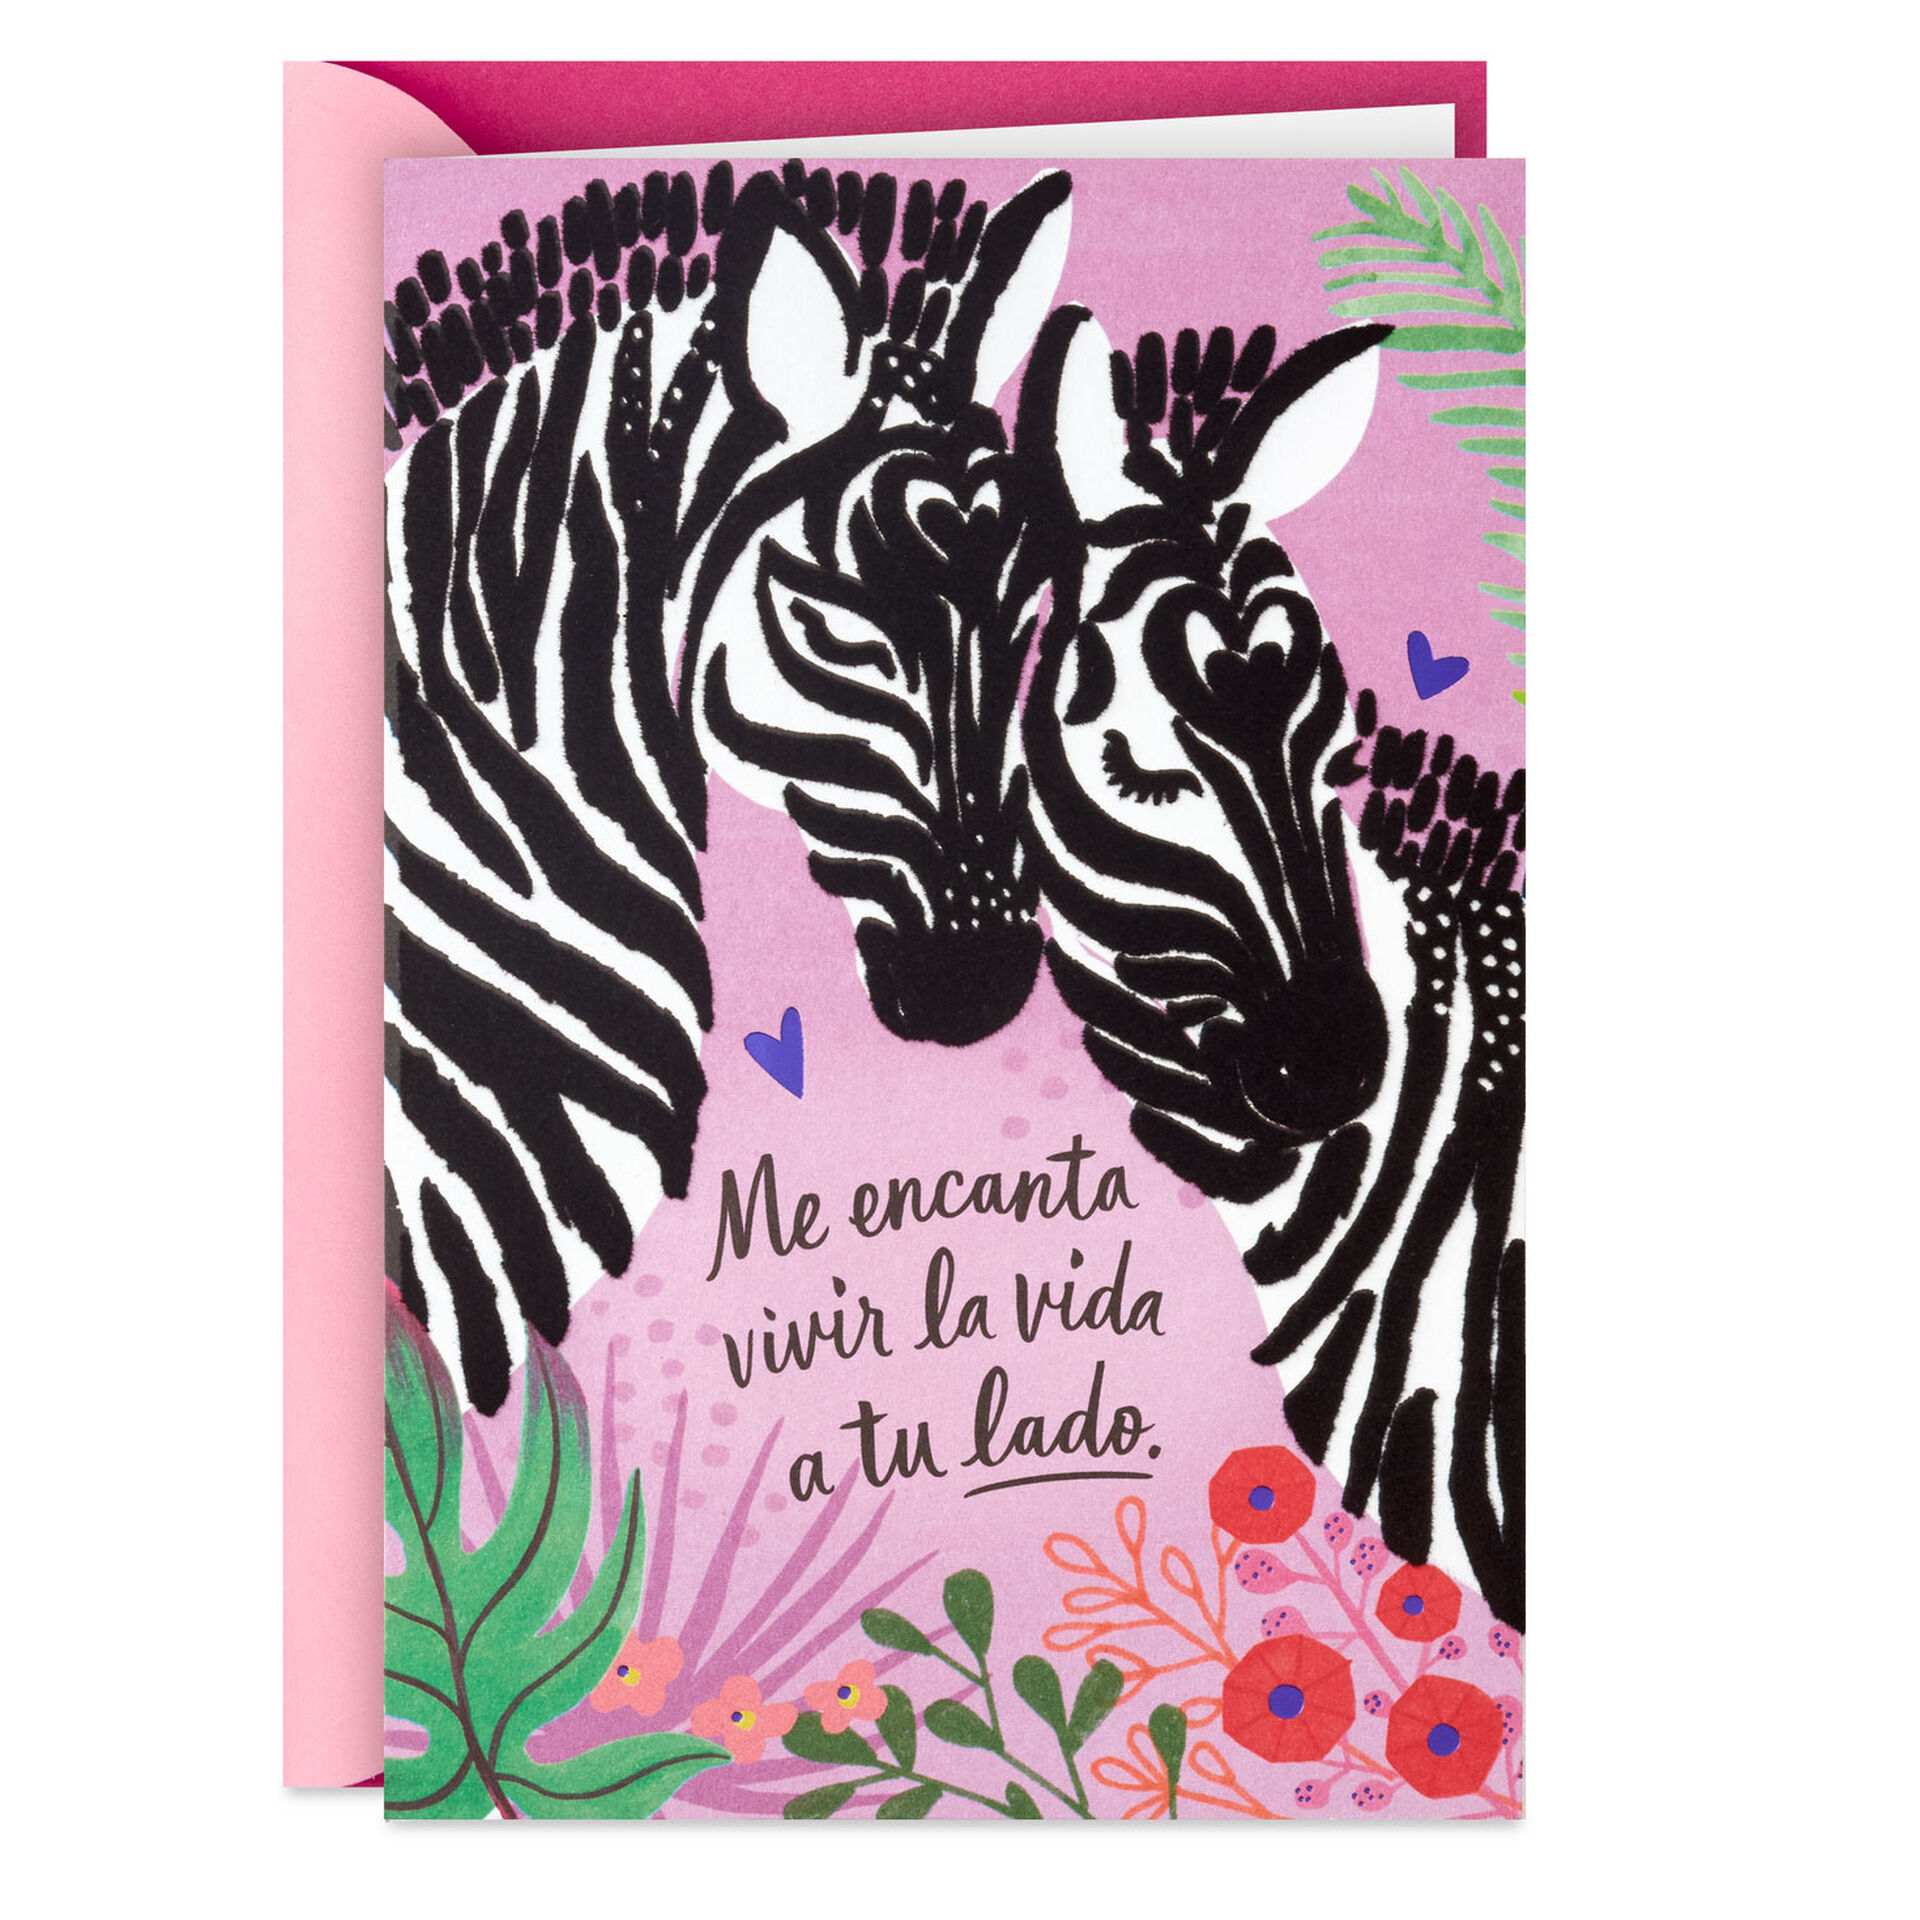 Two-Zebras-Romantic-Spanish-Love-Card-for-Her_499VAS3067_01